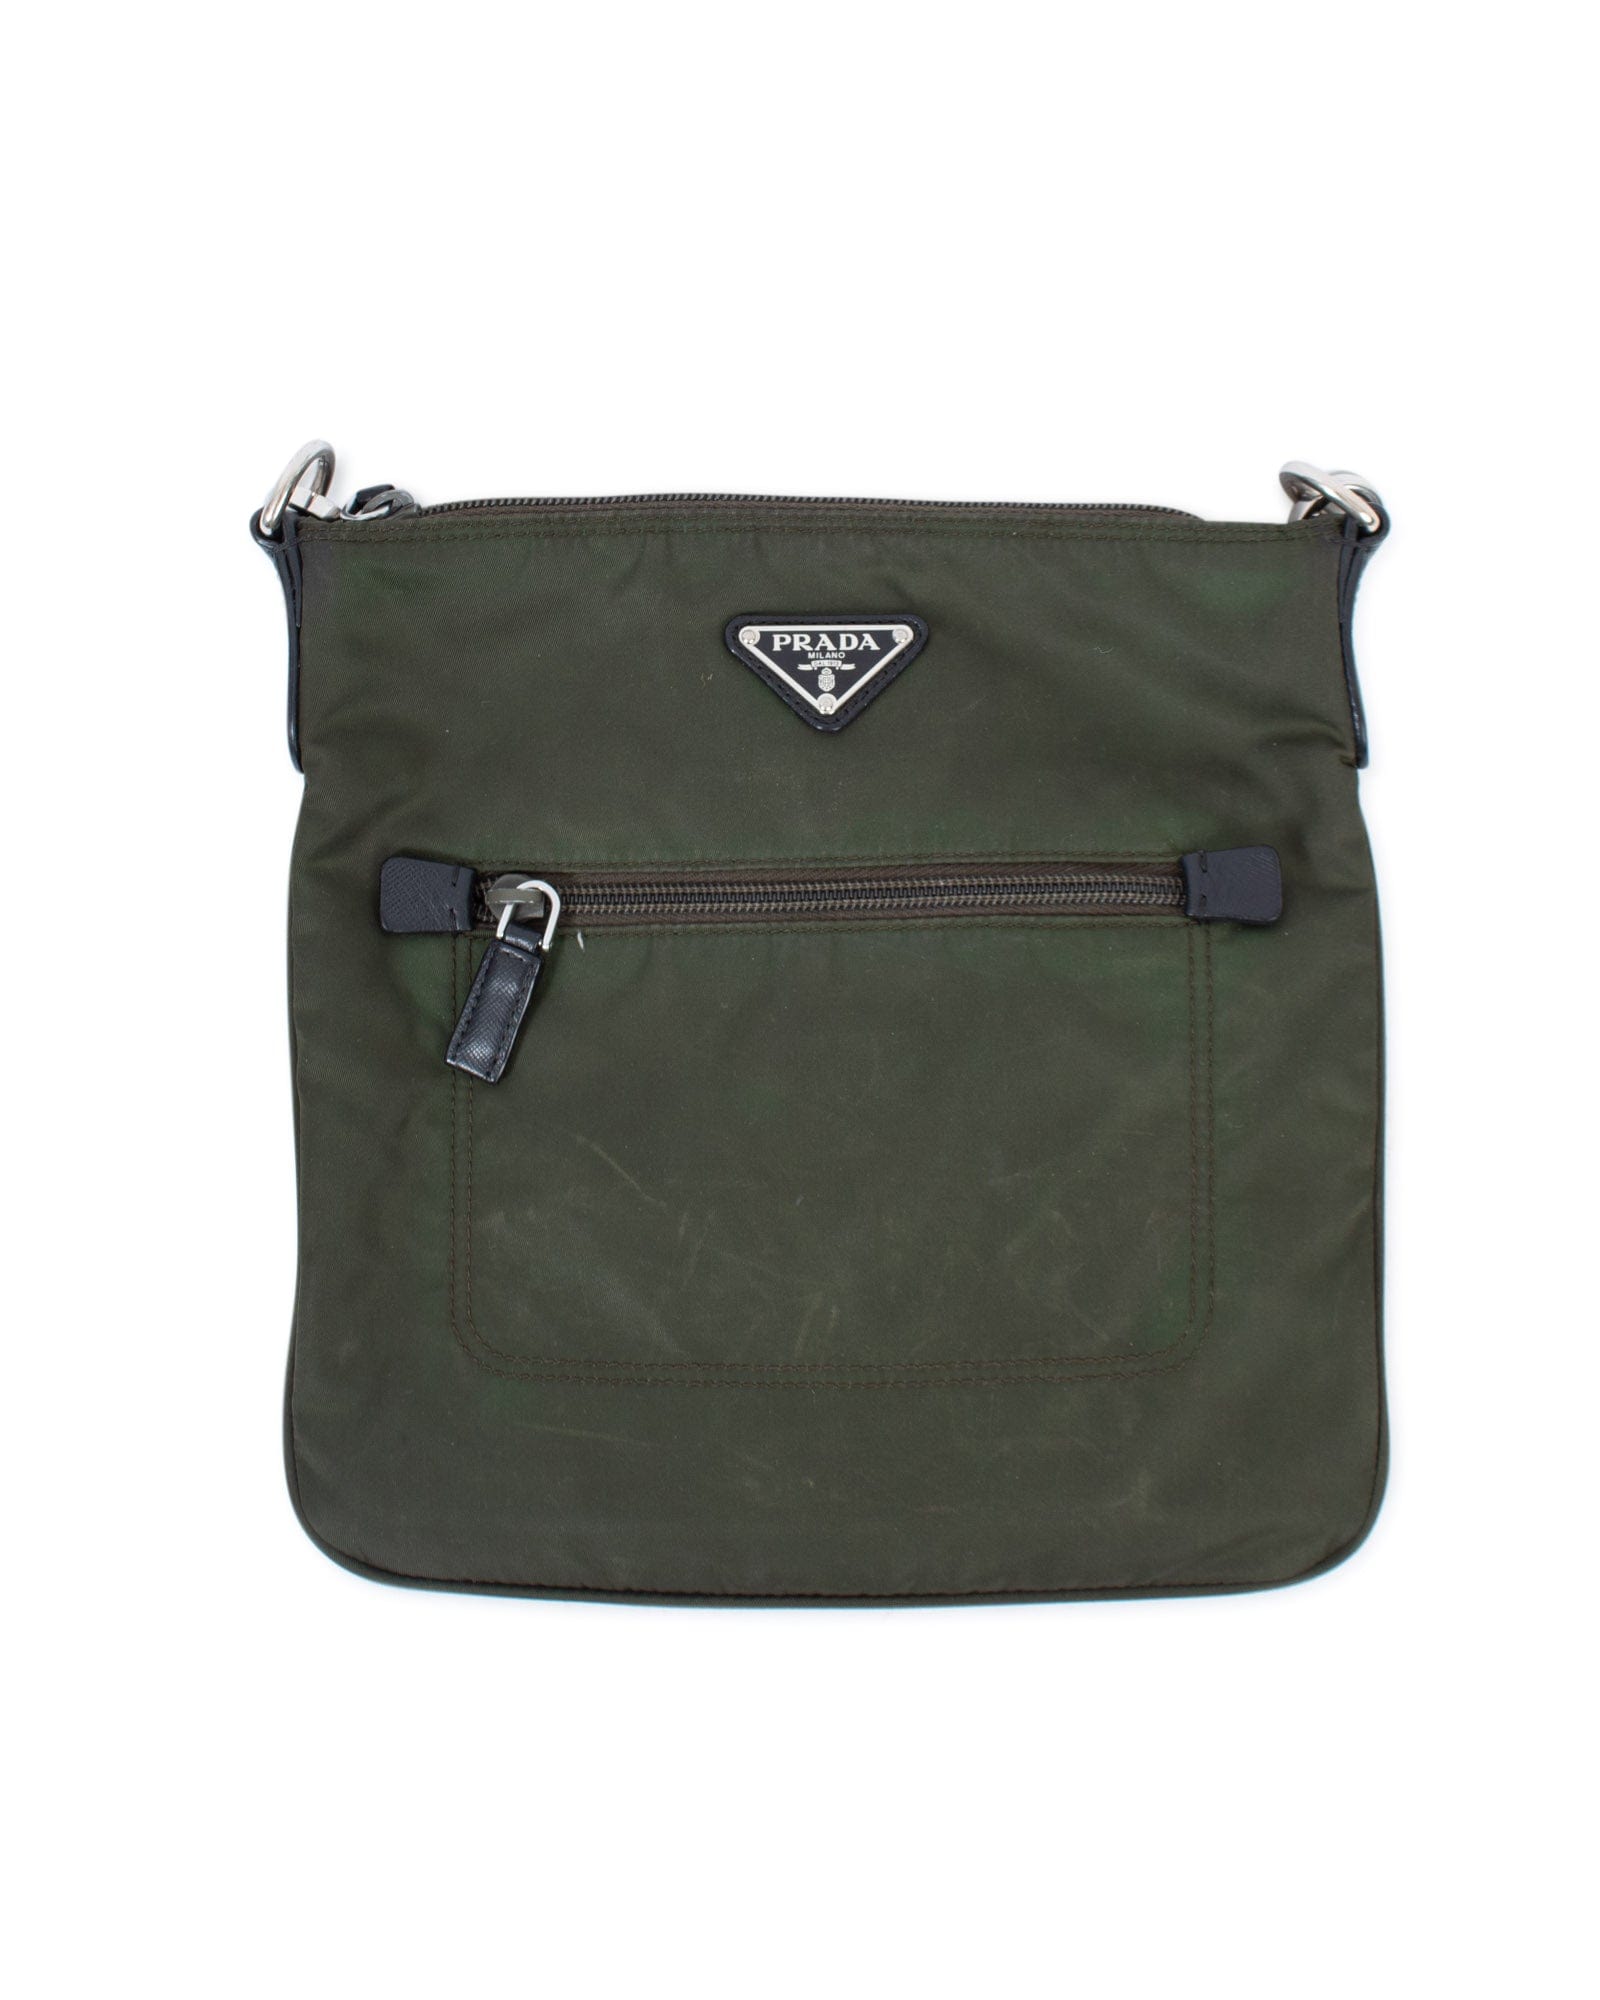 Prada Tessuto Nylon Messenger Bag in Army Green - The Revury